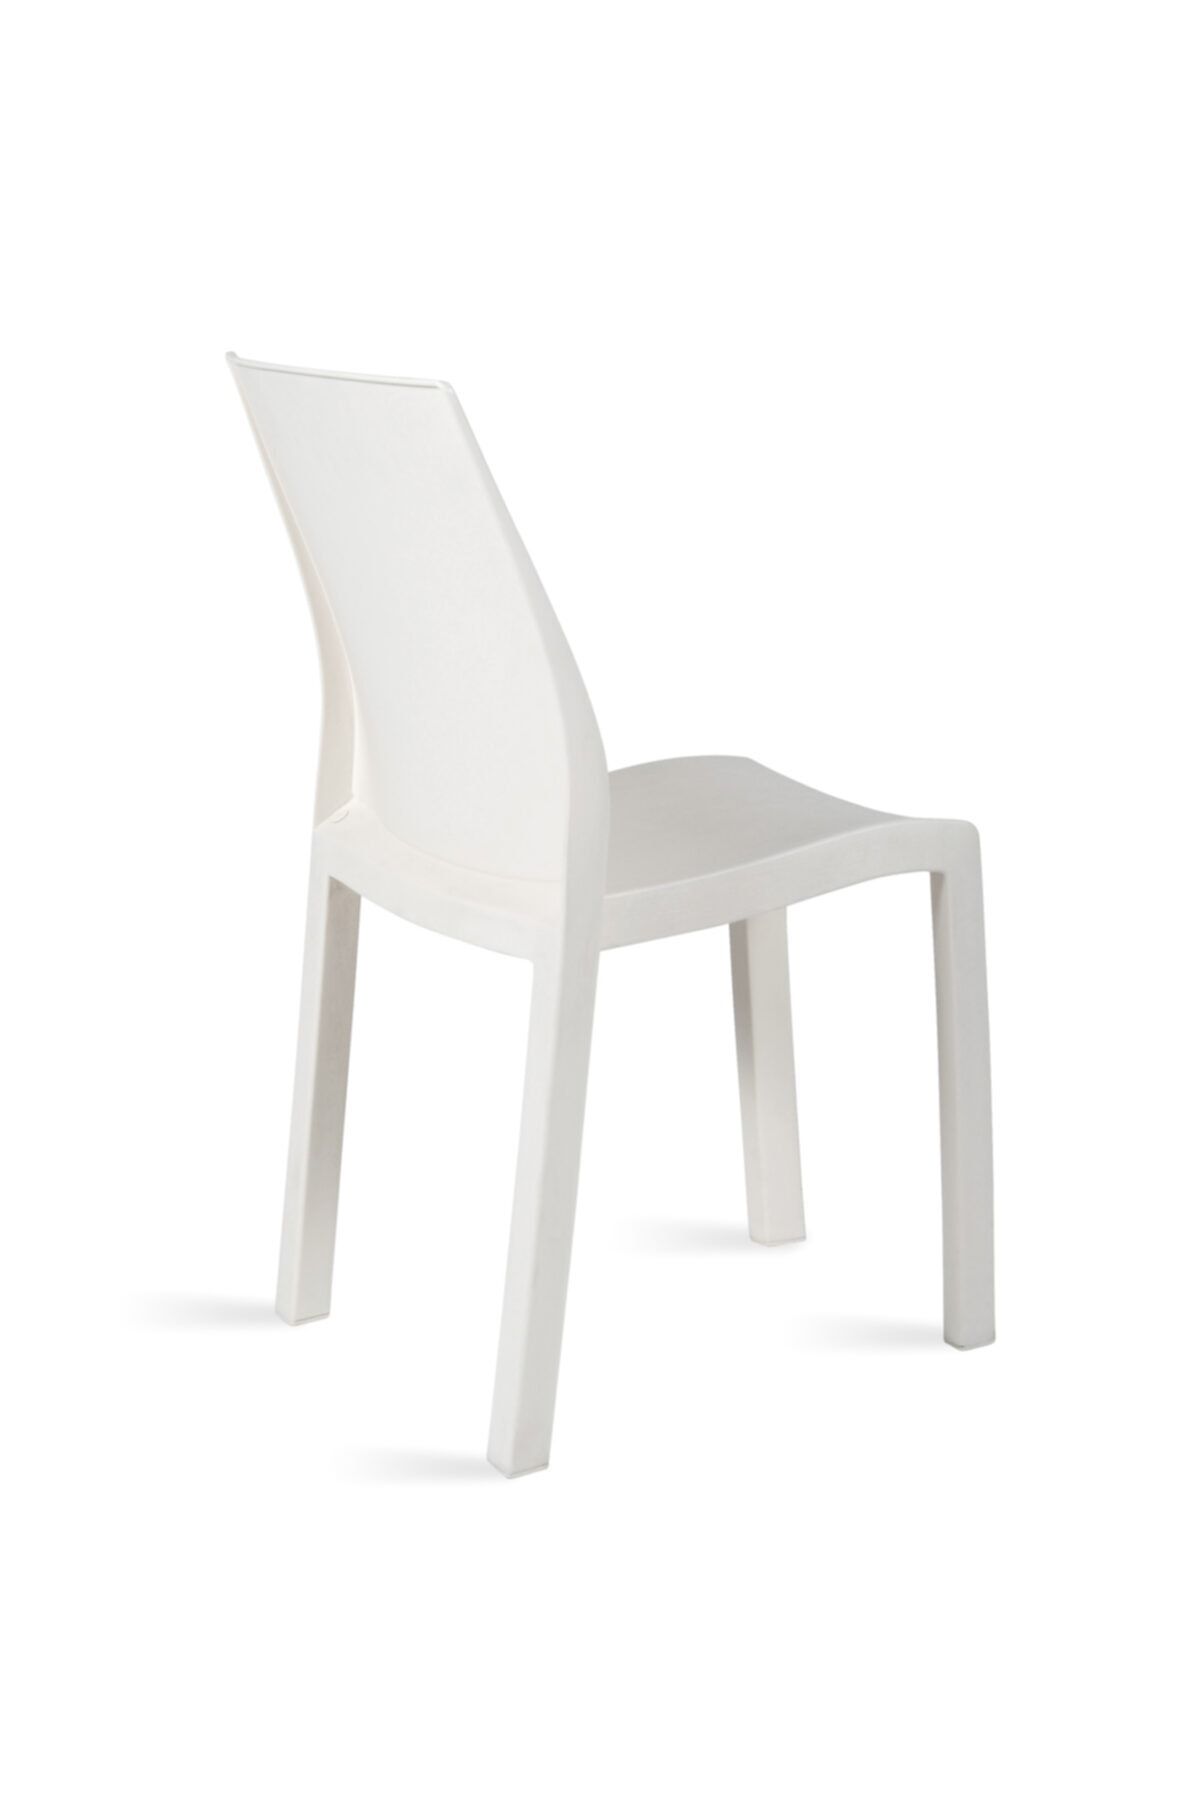 Papatya Yummy Sandalye Beyaz - Plastik Bahçe Sandalyesi